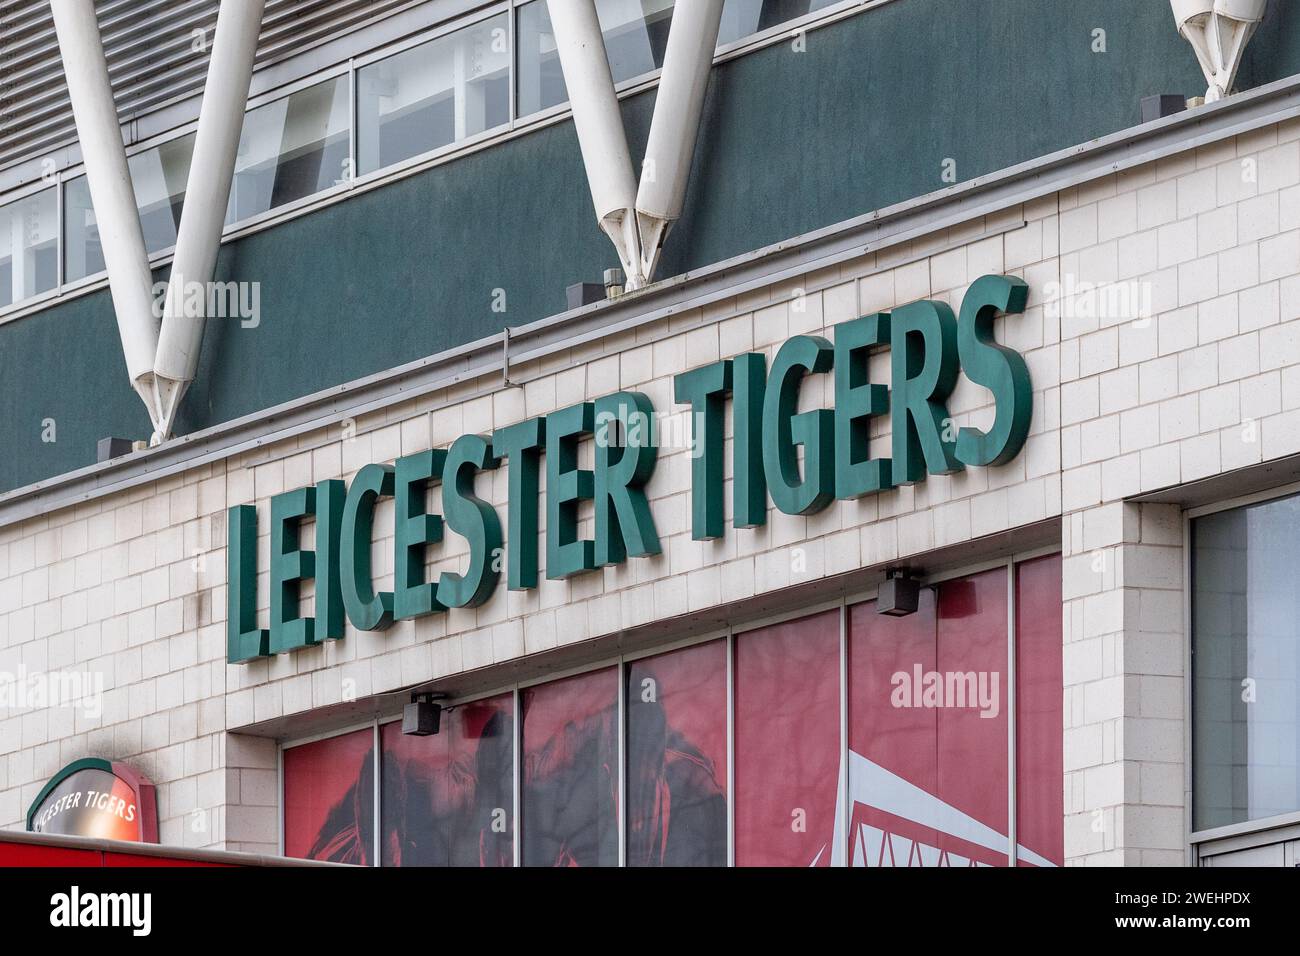 Leicester Tigers Rugby Club Ground in Leicester, Großbritannien. Stockfoto